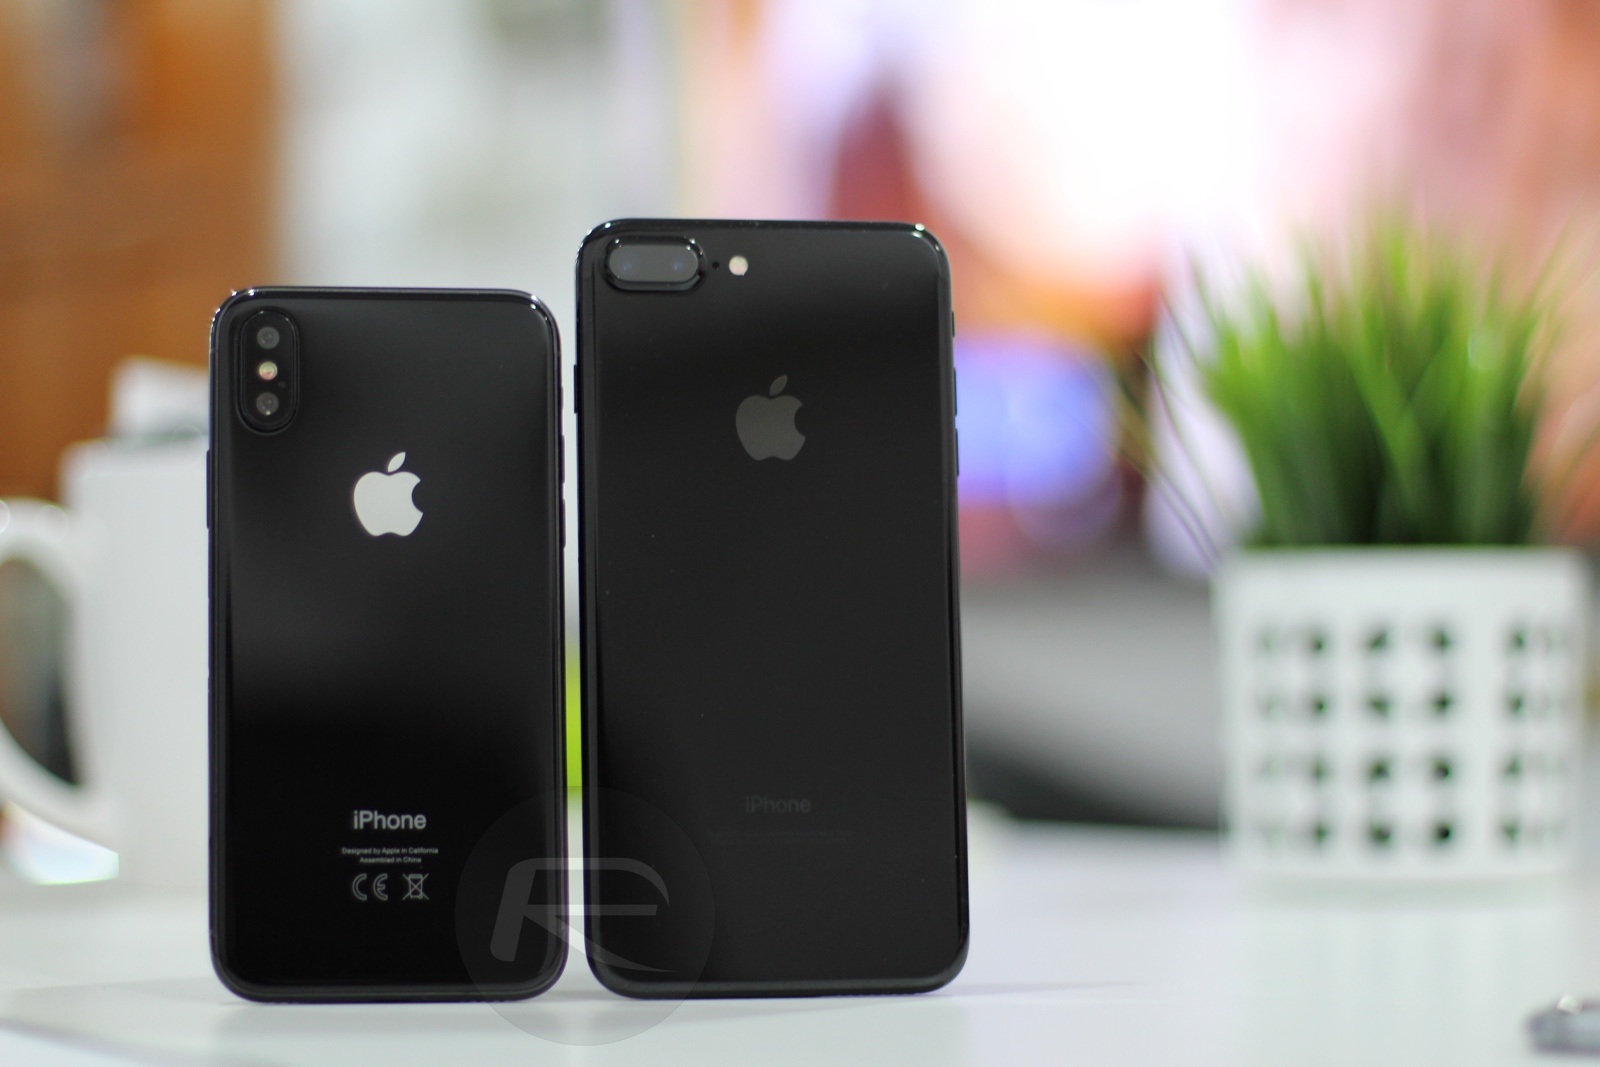 iPhone-8-black-with-iPhone-7-Plus